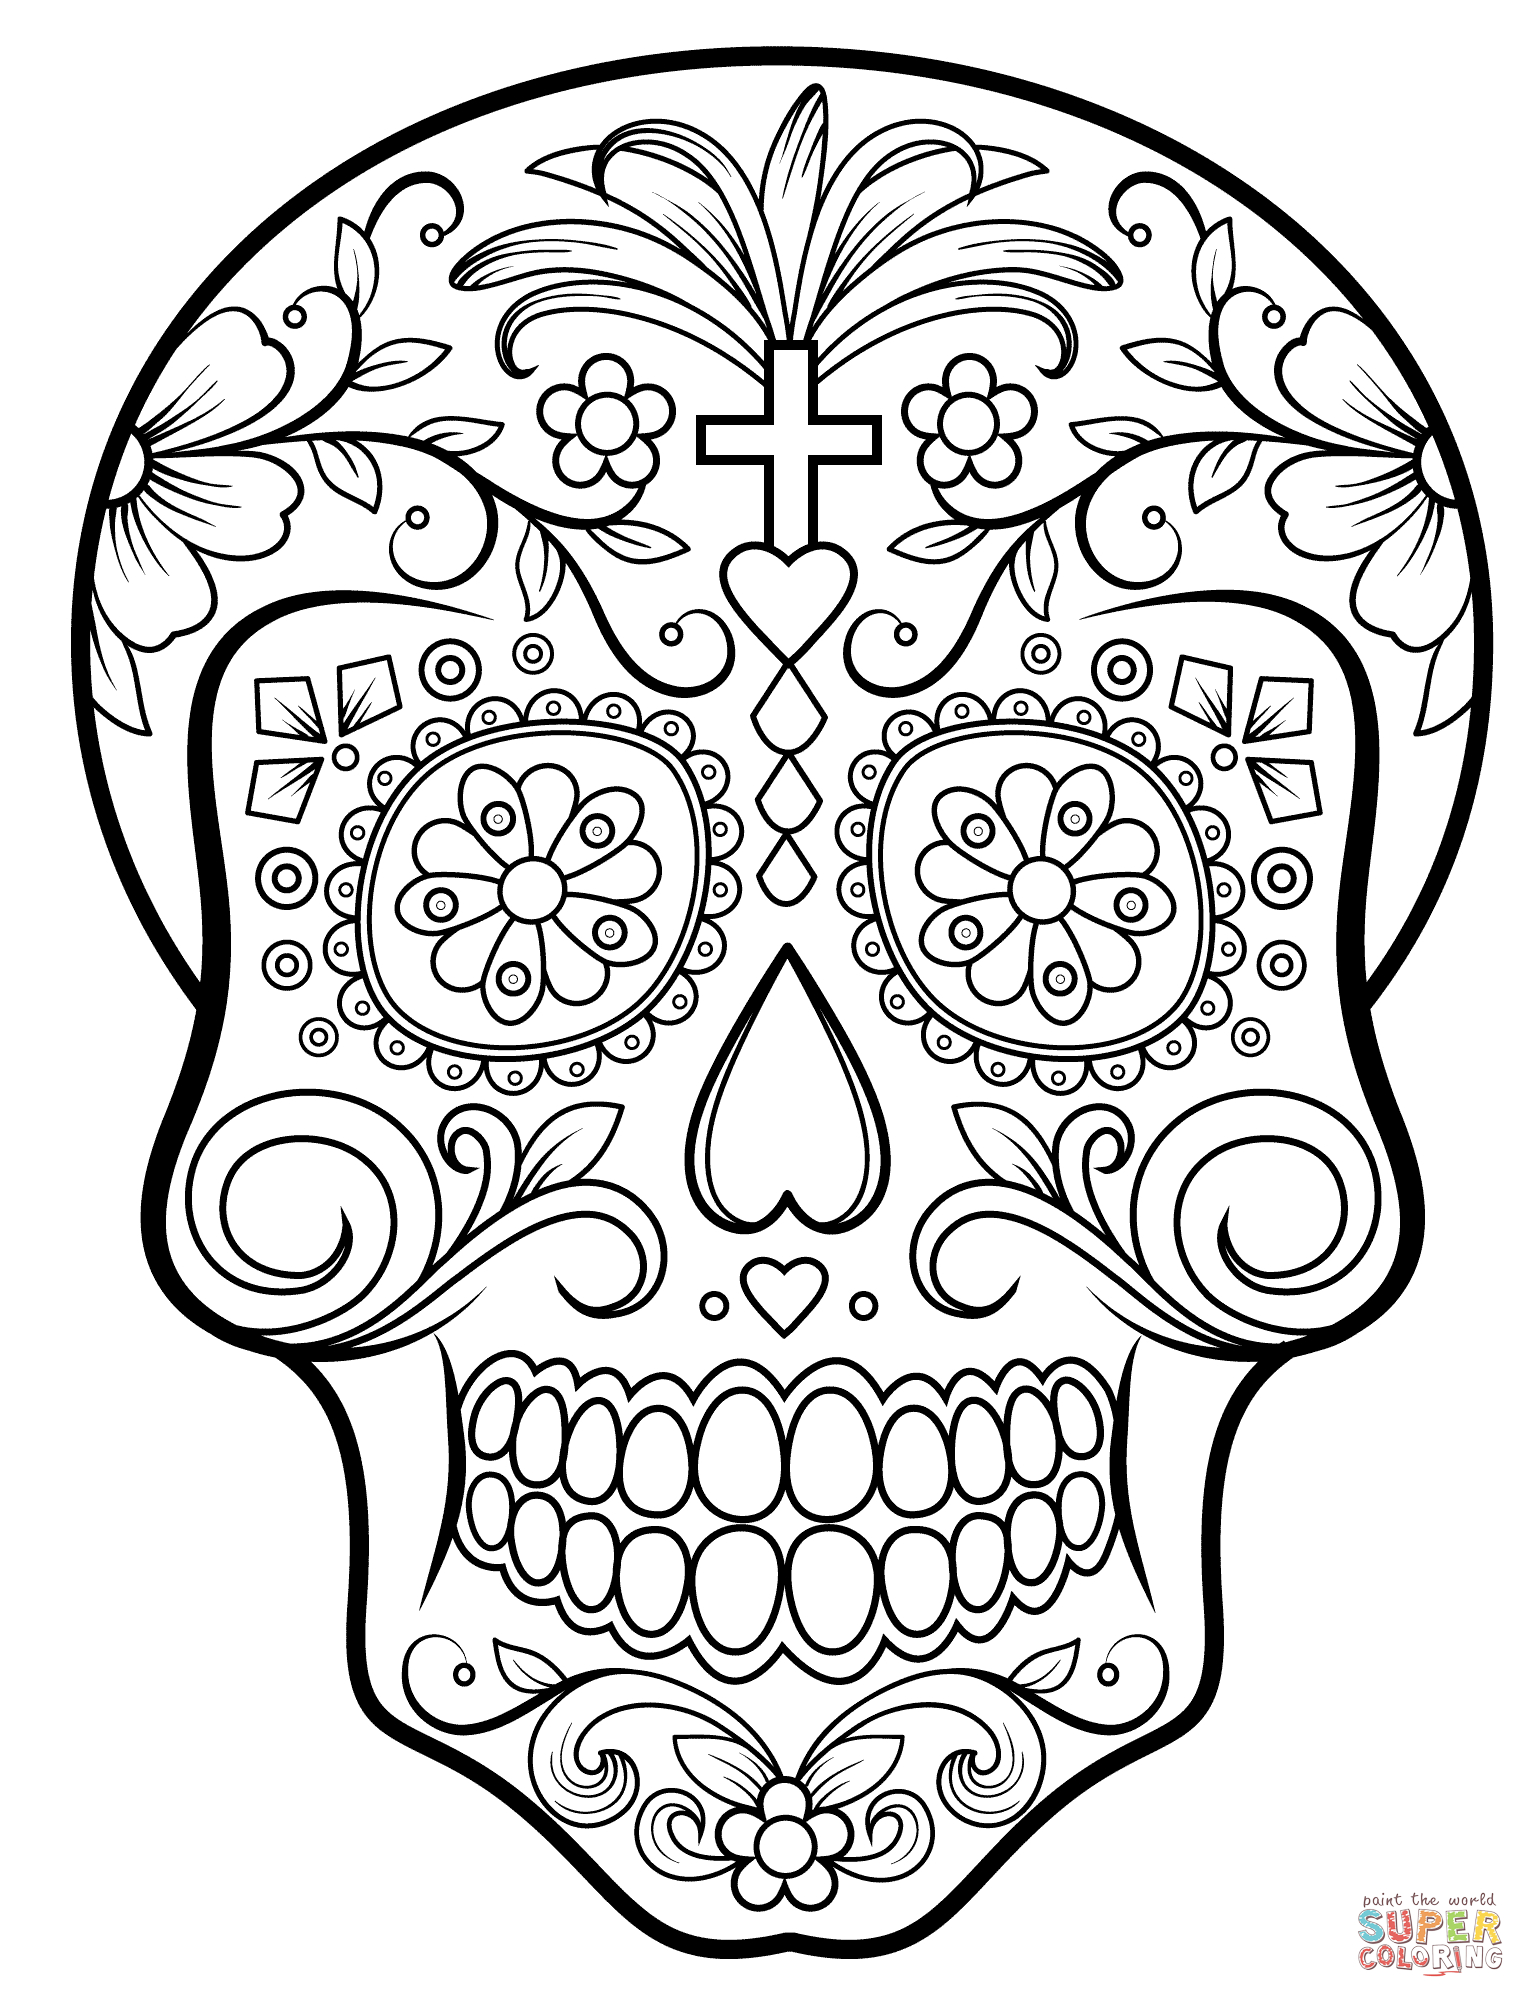 Sugar Skulls Coloring Pages | Free Coloring Pages - Free Printable Sugar Skull Coloring Pages